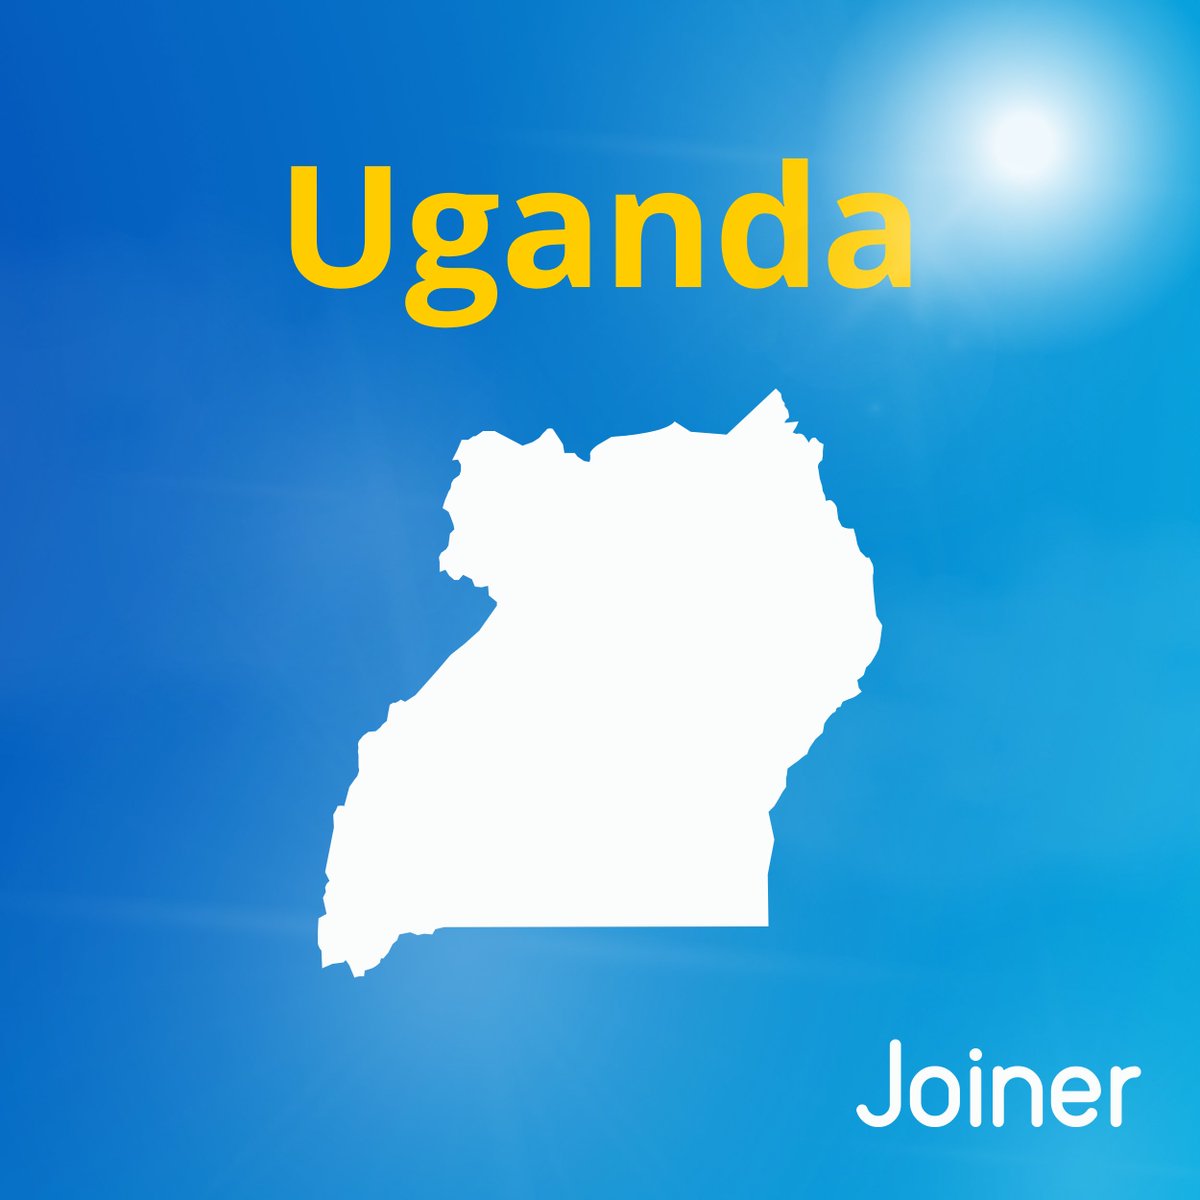 Welcome to Joiner, Uganda! #joiner #Join #joinerapp #seeyouthere #friends #community #communitystrong #technology #technews #app #social #socialapp #uganda #kampala #home